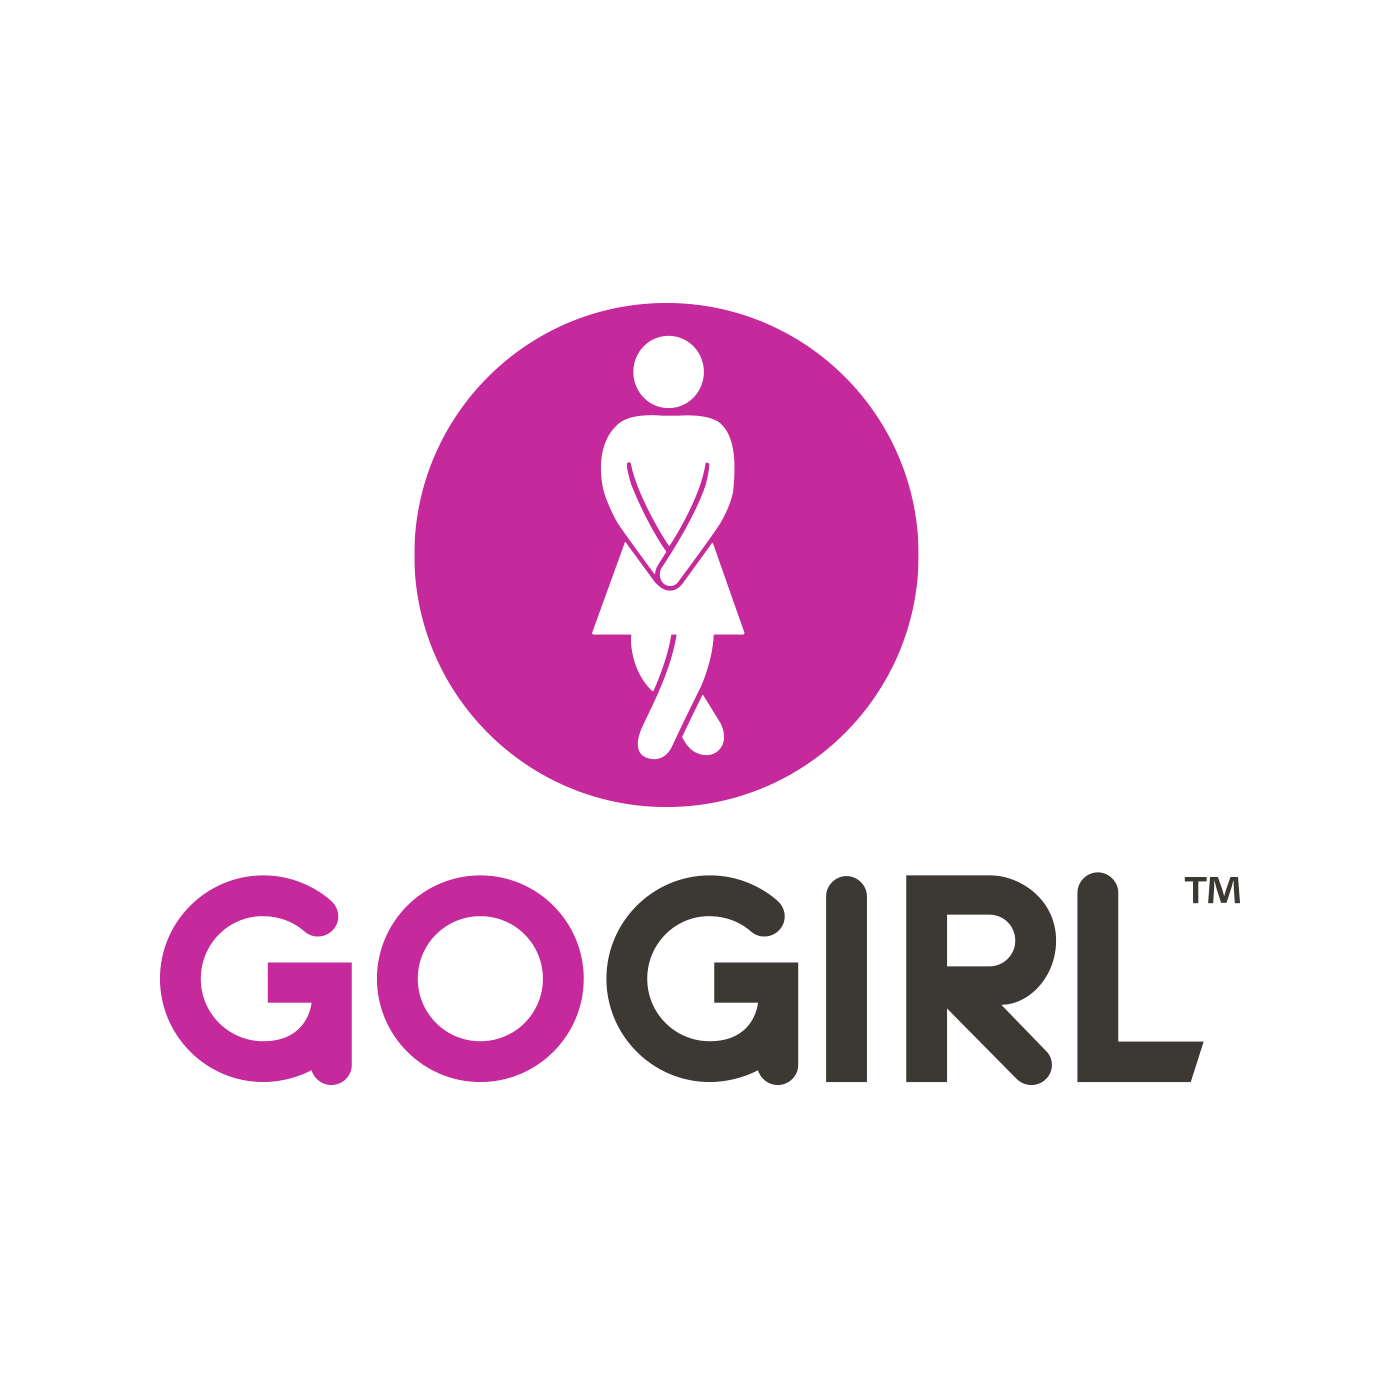 GoGirl Female Urination Device (FUD)